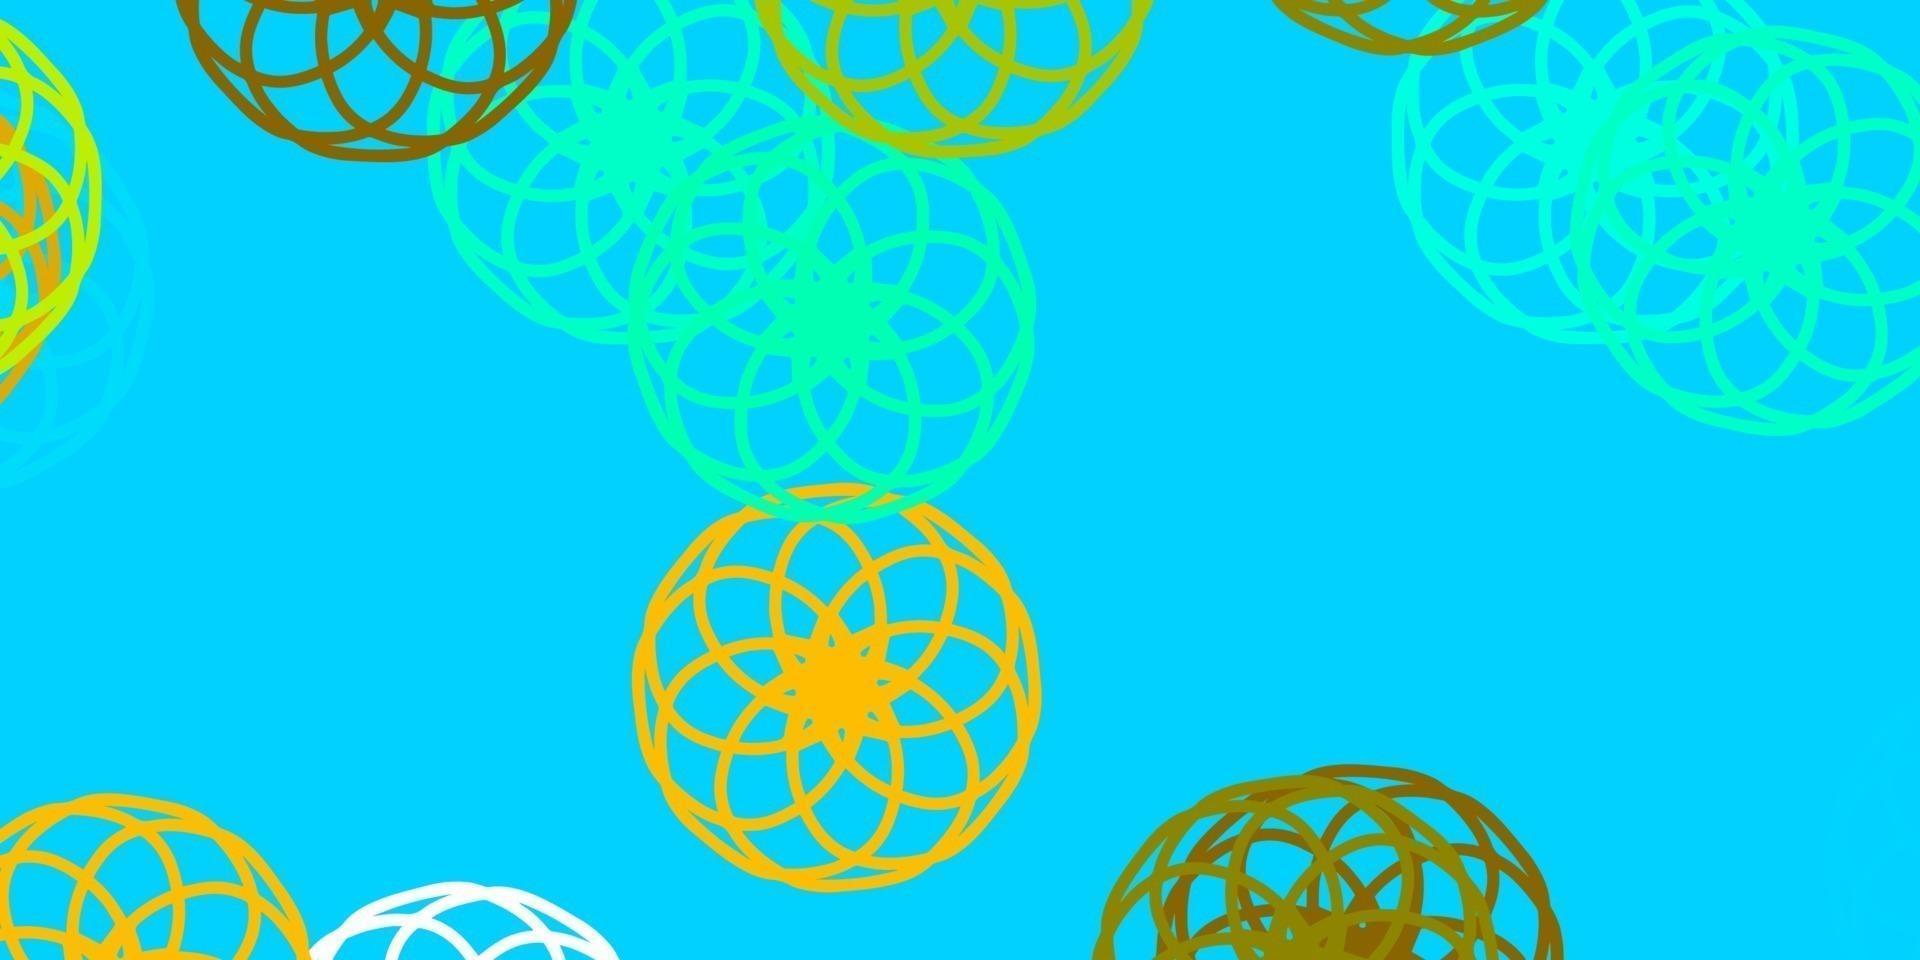 lichtblauwe, gele vectorlay-out met cirkelvormen. vector